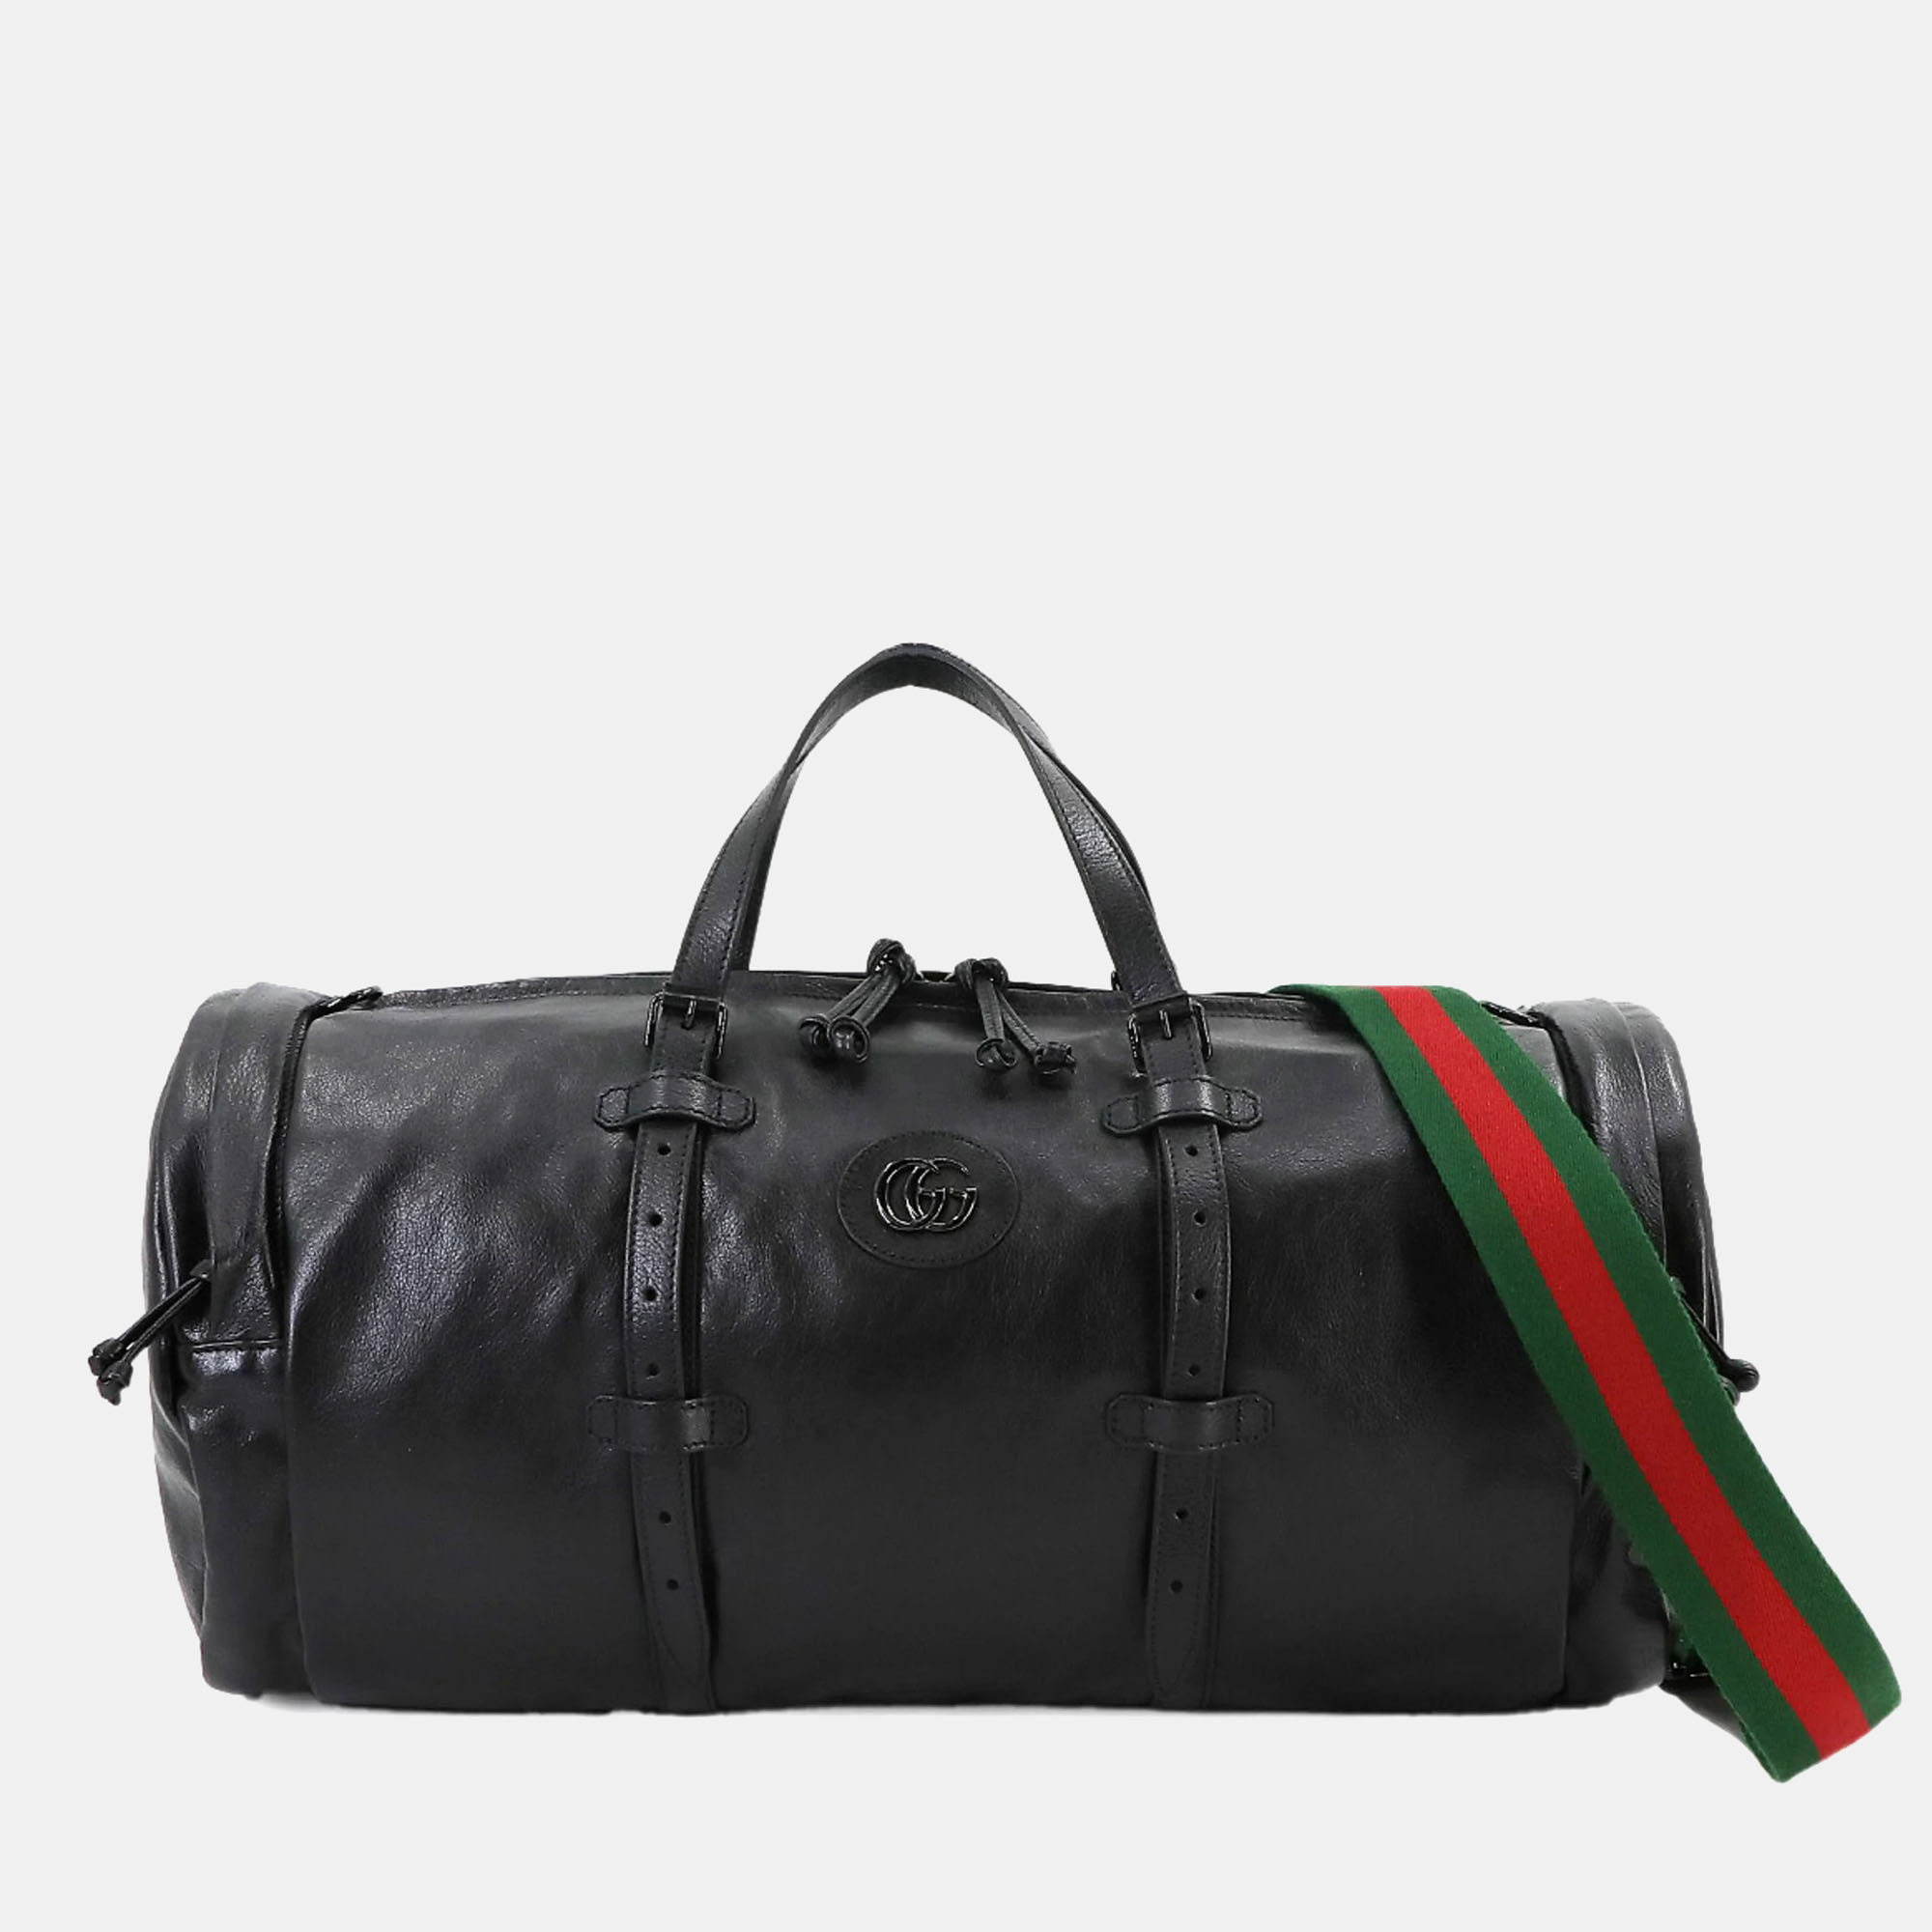 Gucci black leather tonal double g large duffle bag